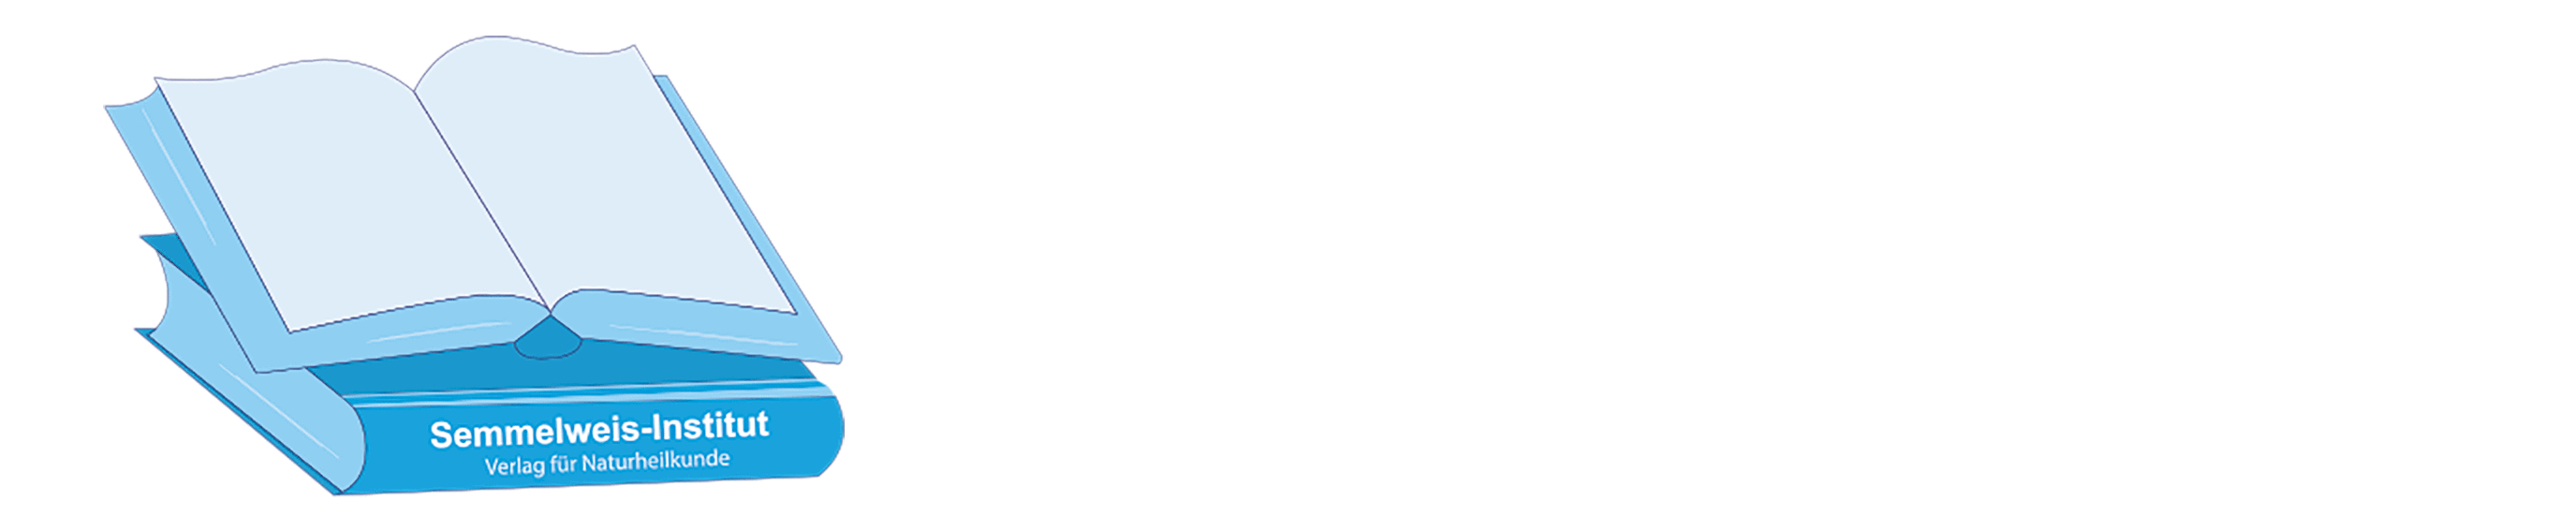 Semmelweis-Institut-Logo